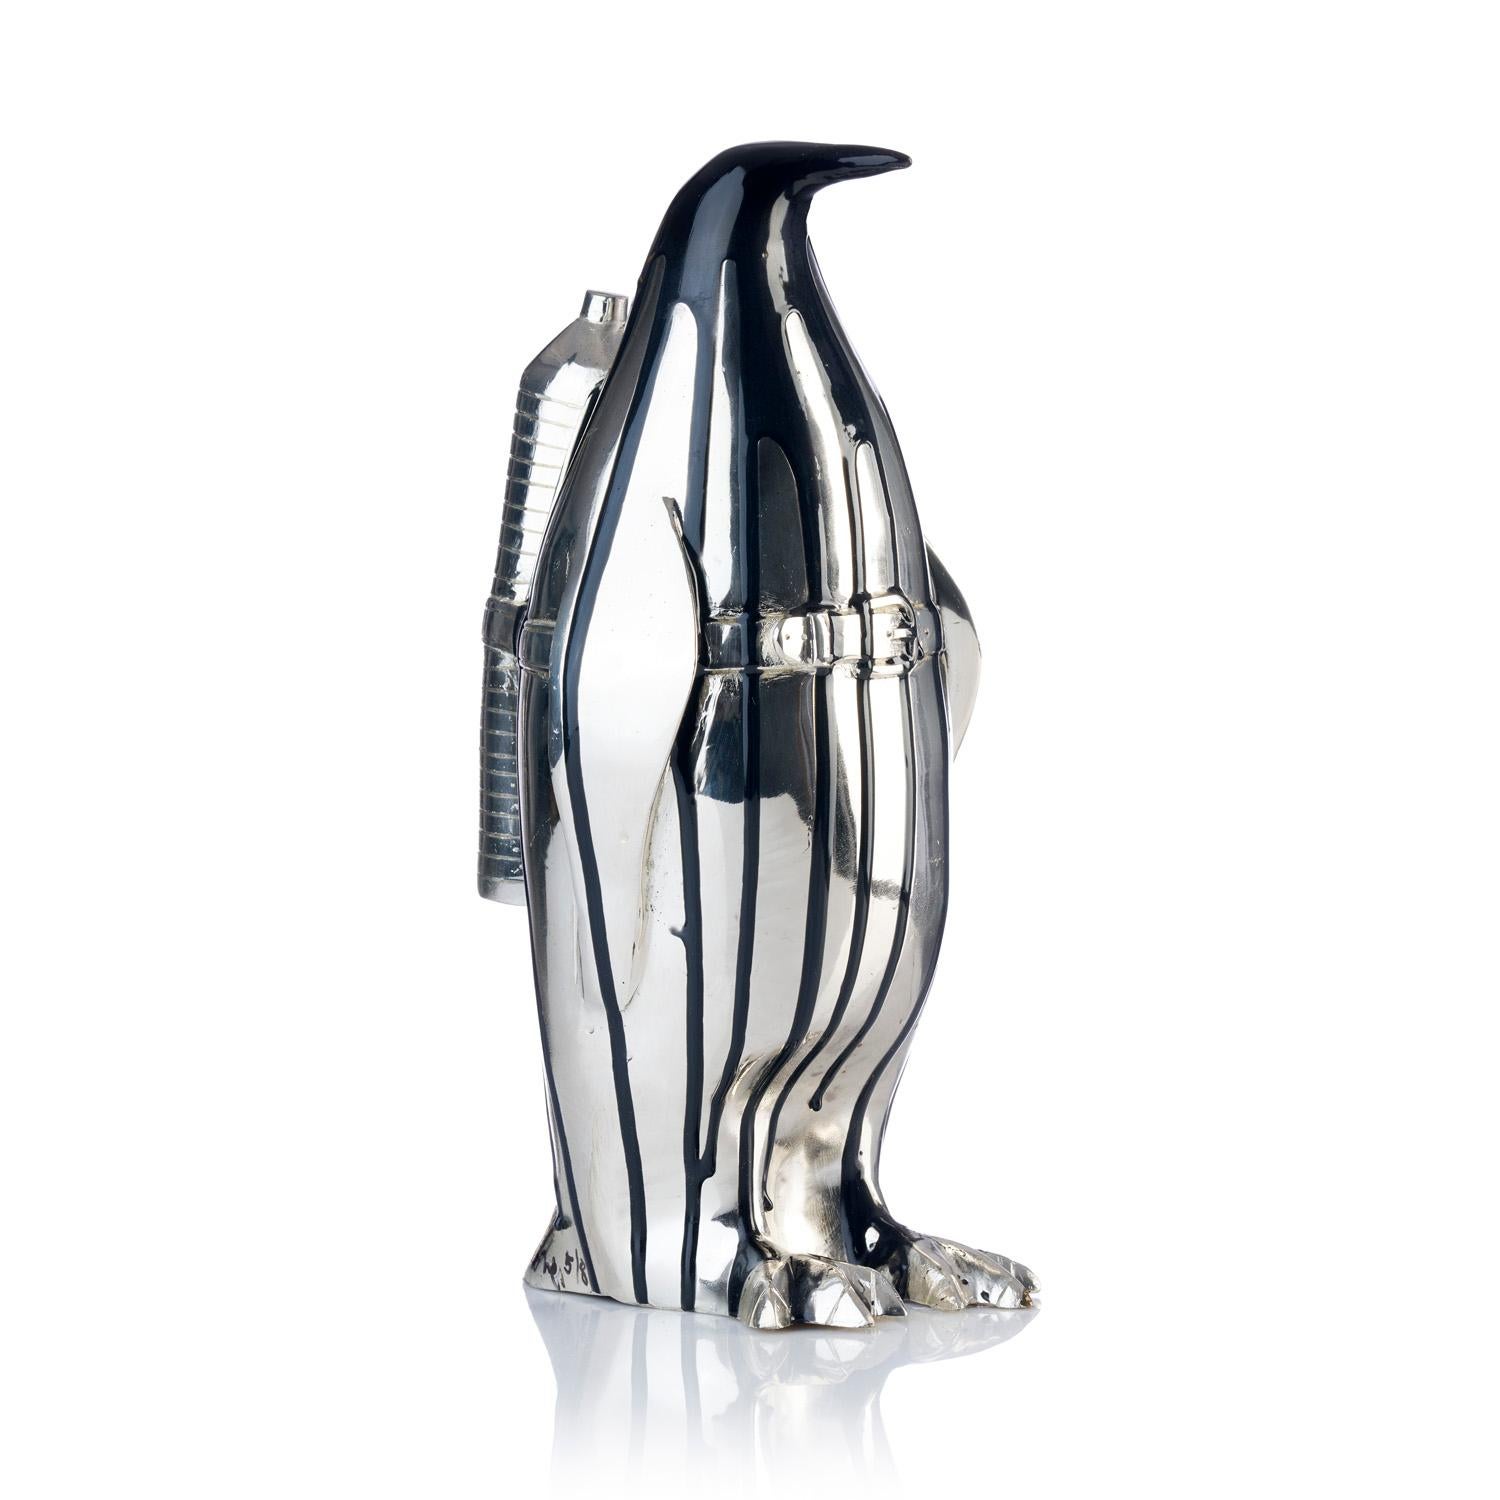 William Sweetlove Figurative Sculpture - Cloned Penguin with pet bottle (black) 